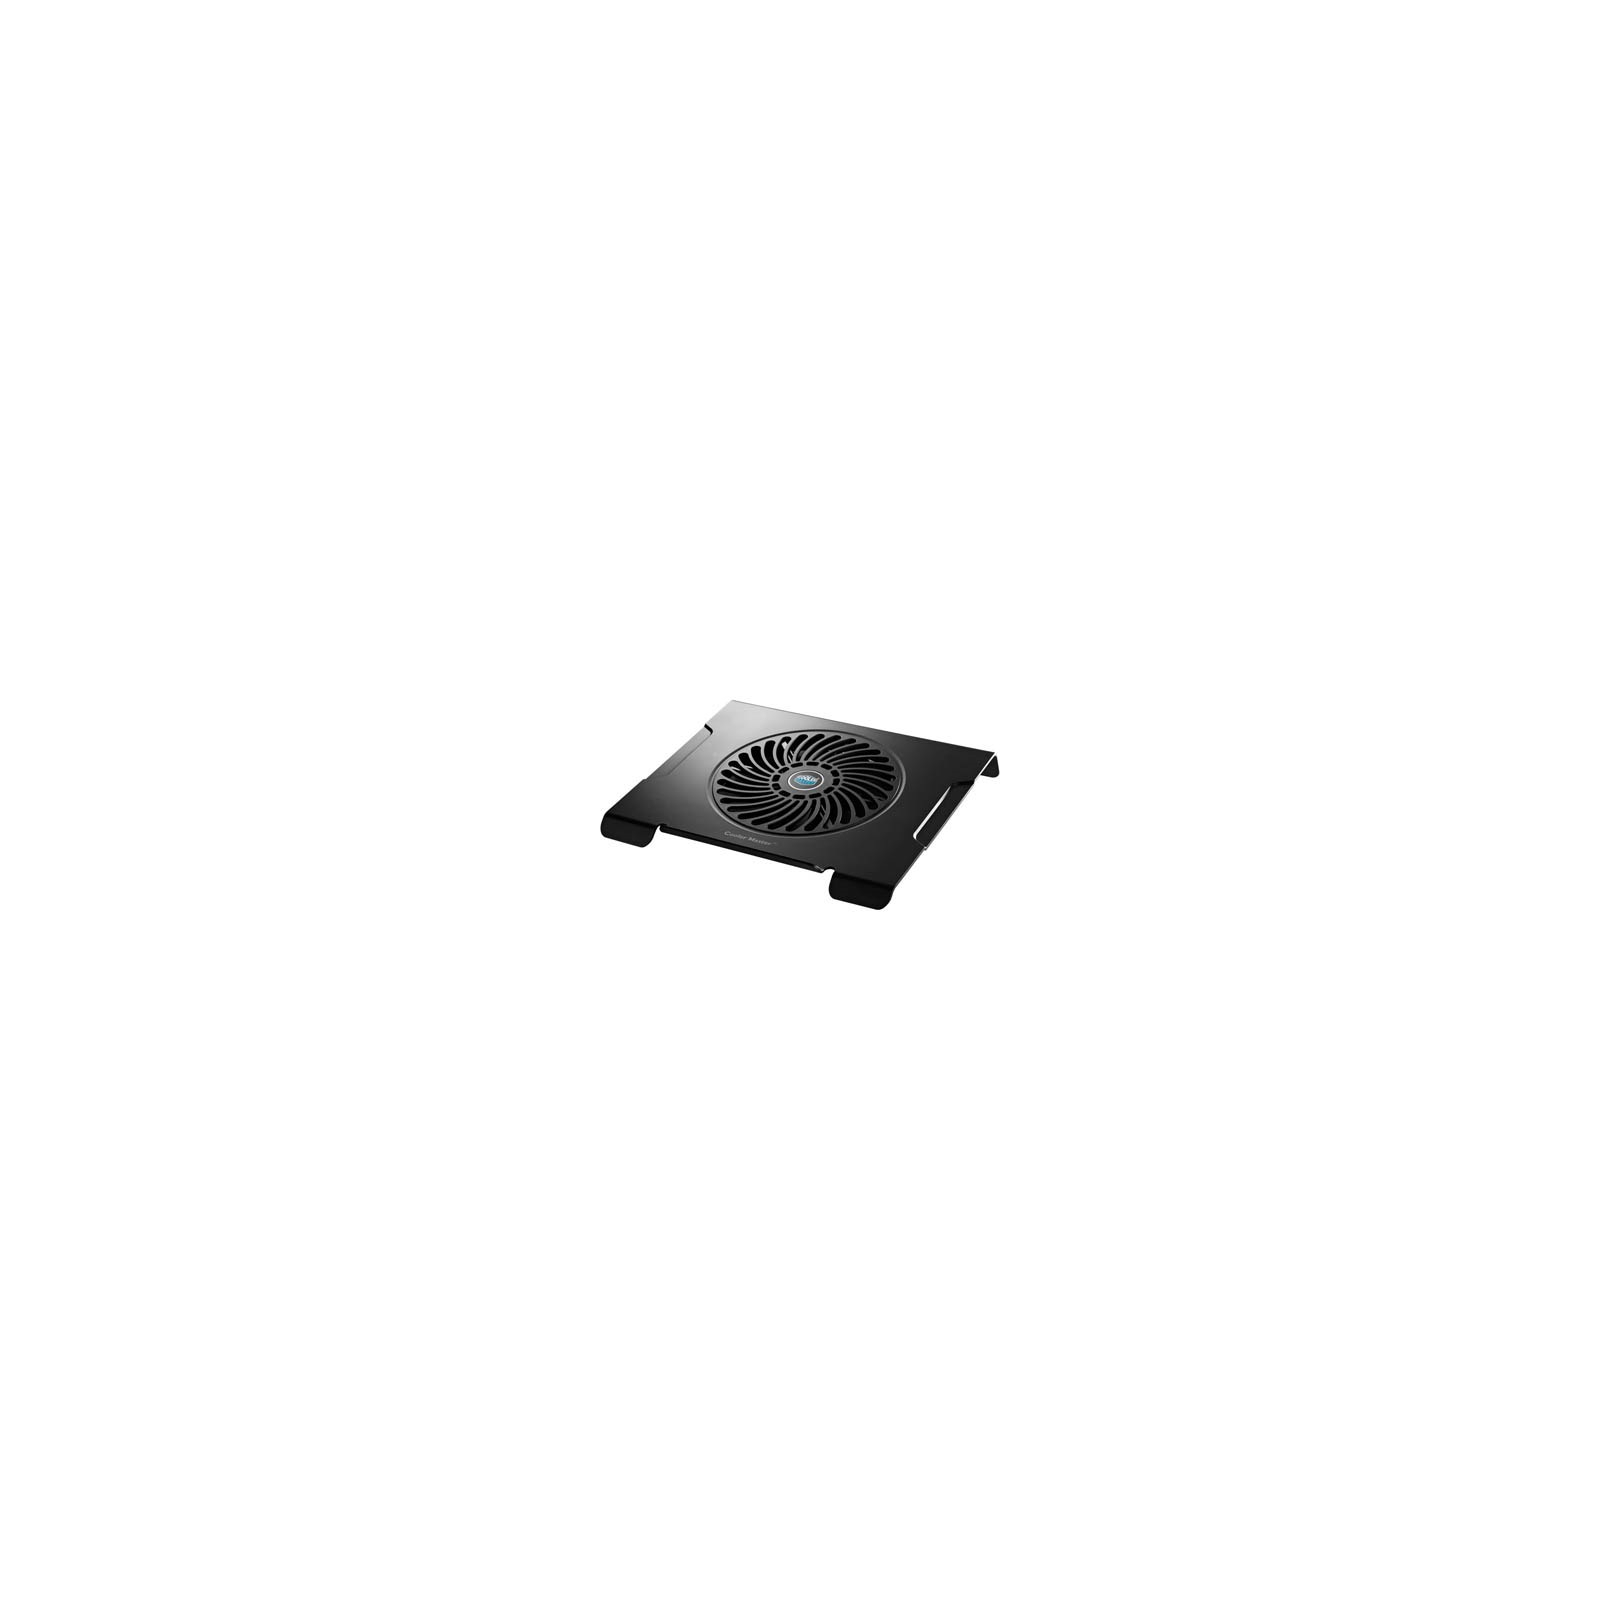 Подставка для ноутбука CoolerMaster Notepal CMC3 (R9-NBC-CMC3-GP)